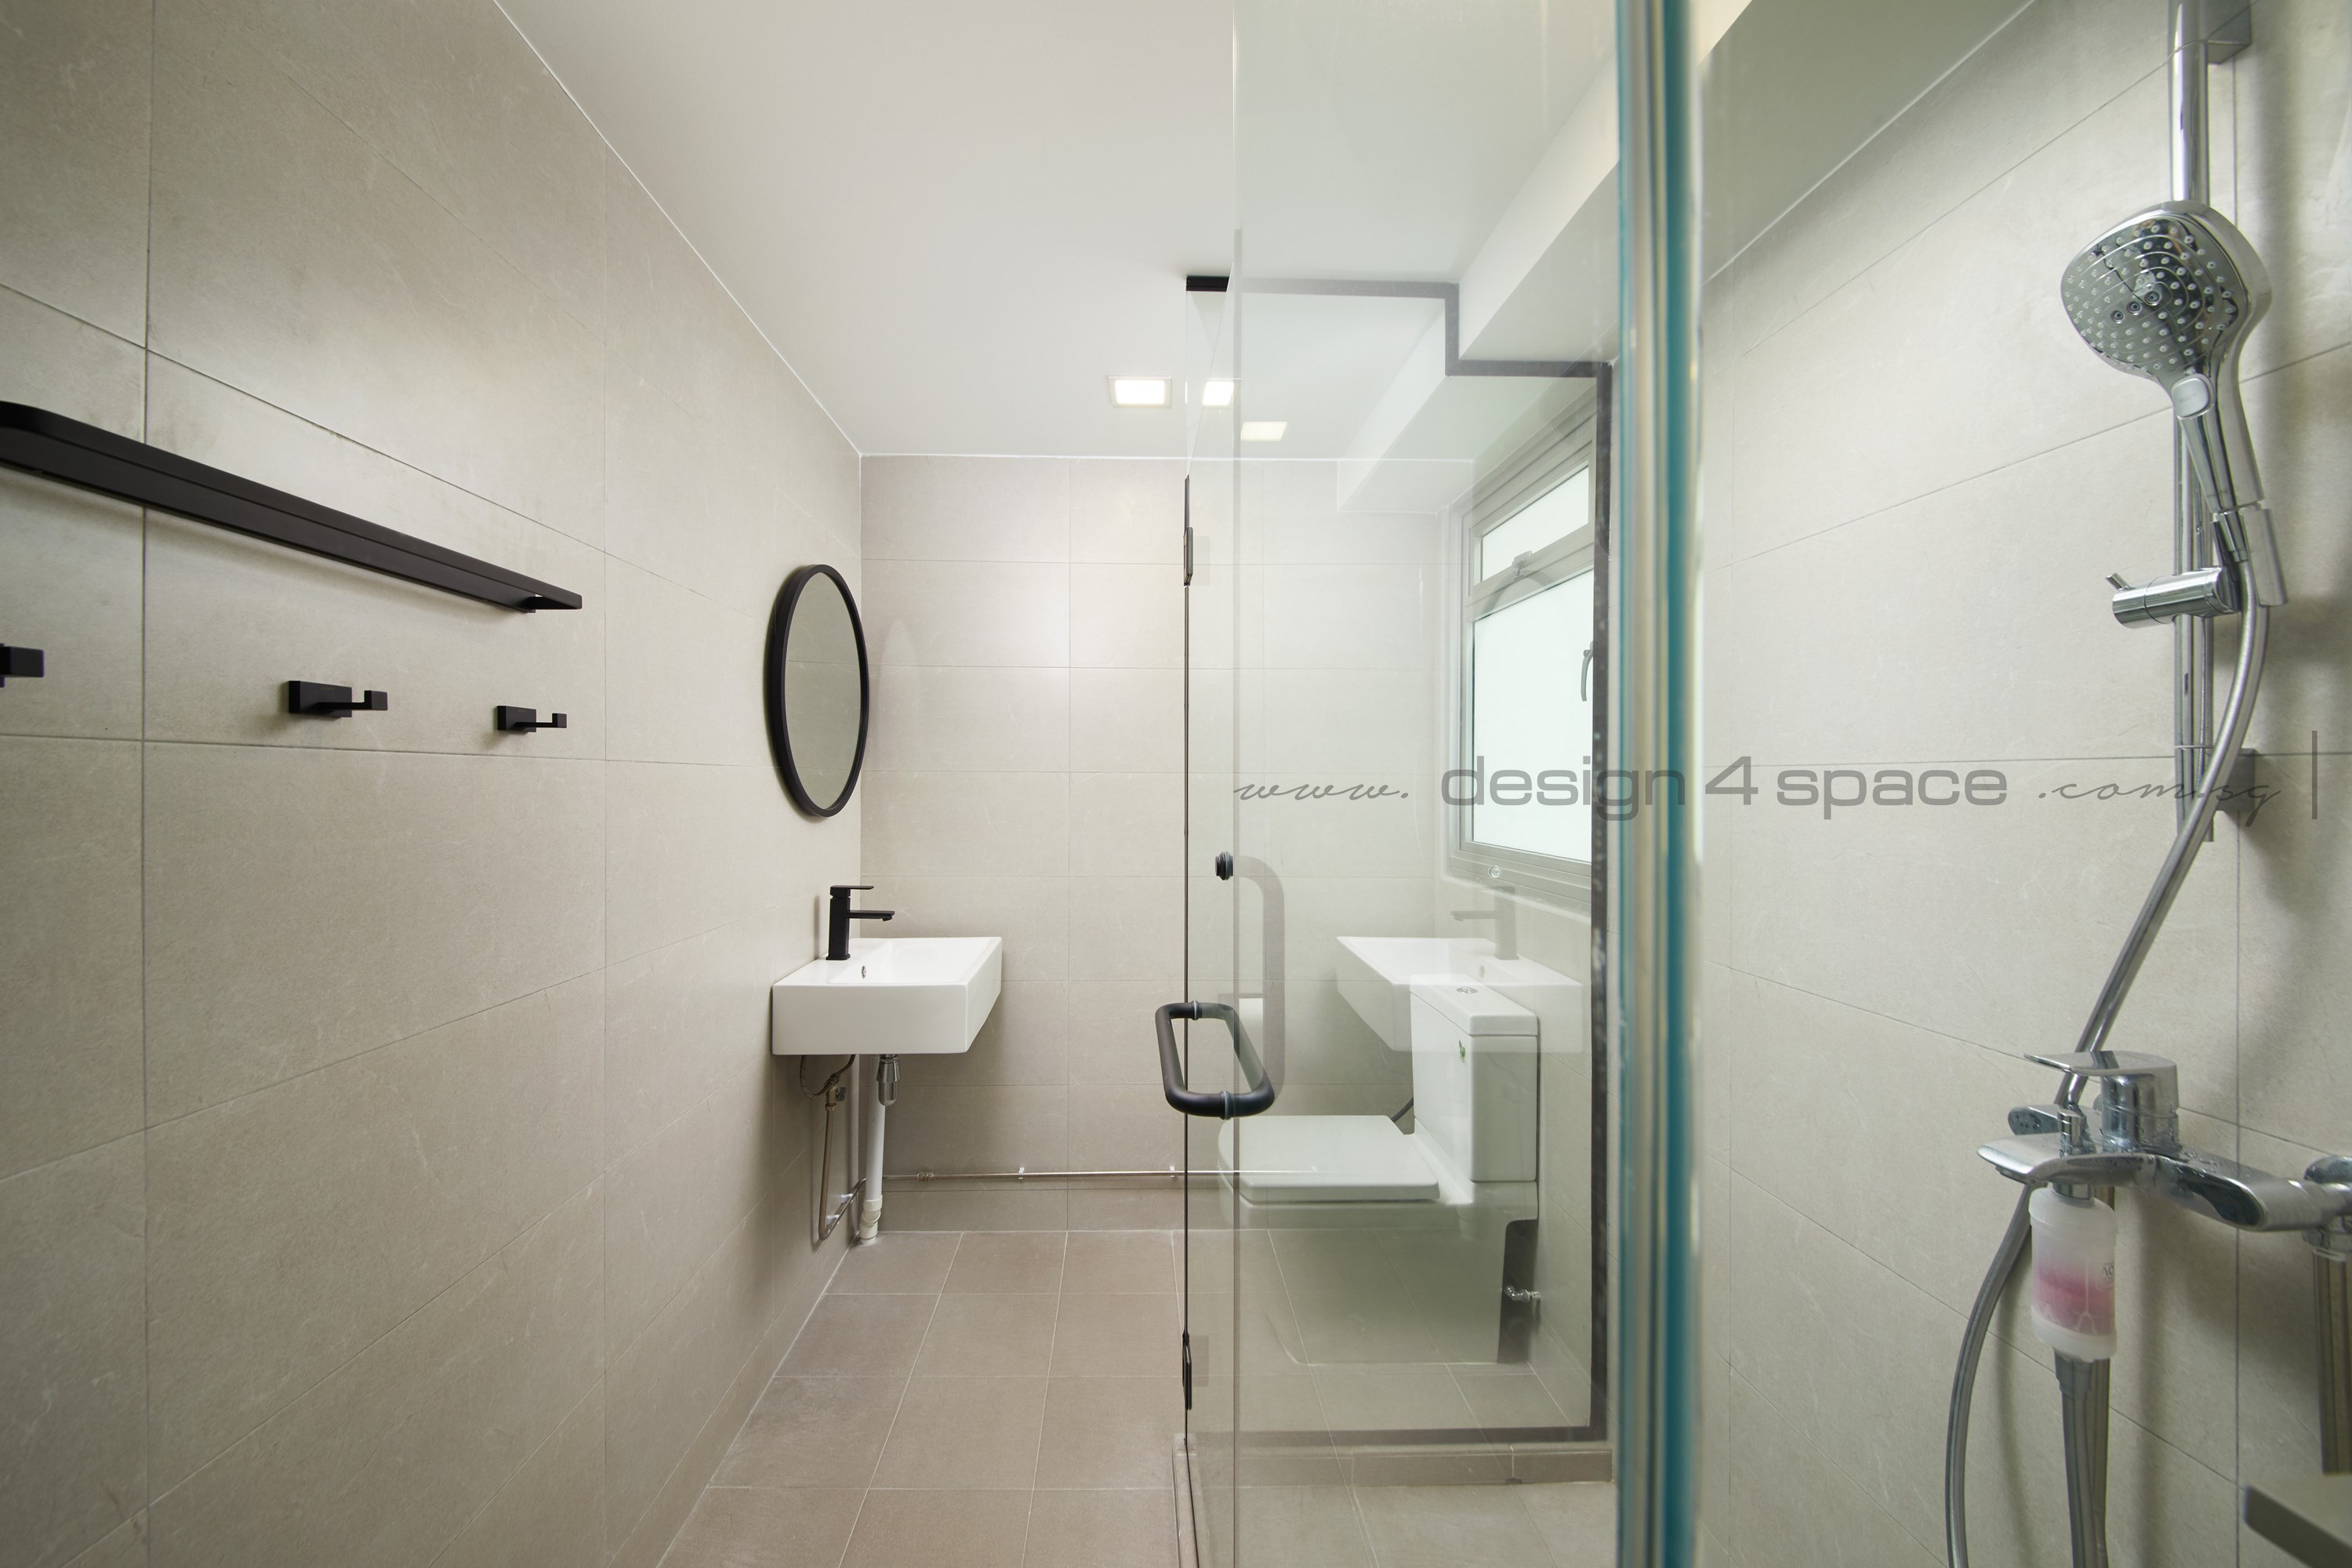 Contemporary Design - Bathroom - HDB Studio Apartment - Design by Design 4 Space Pte Ltd